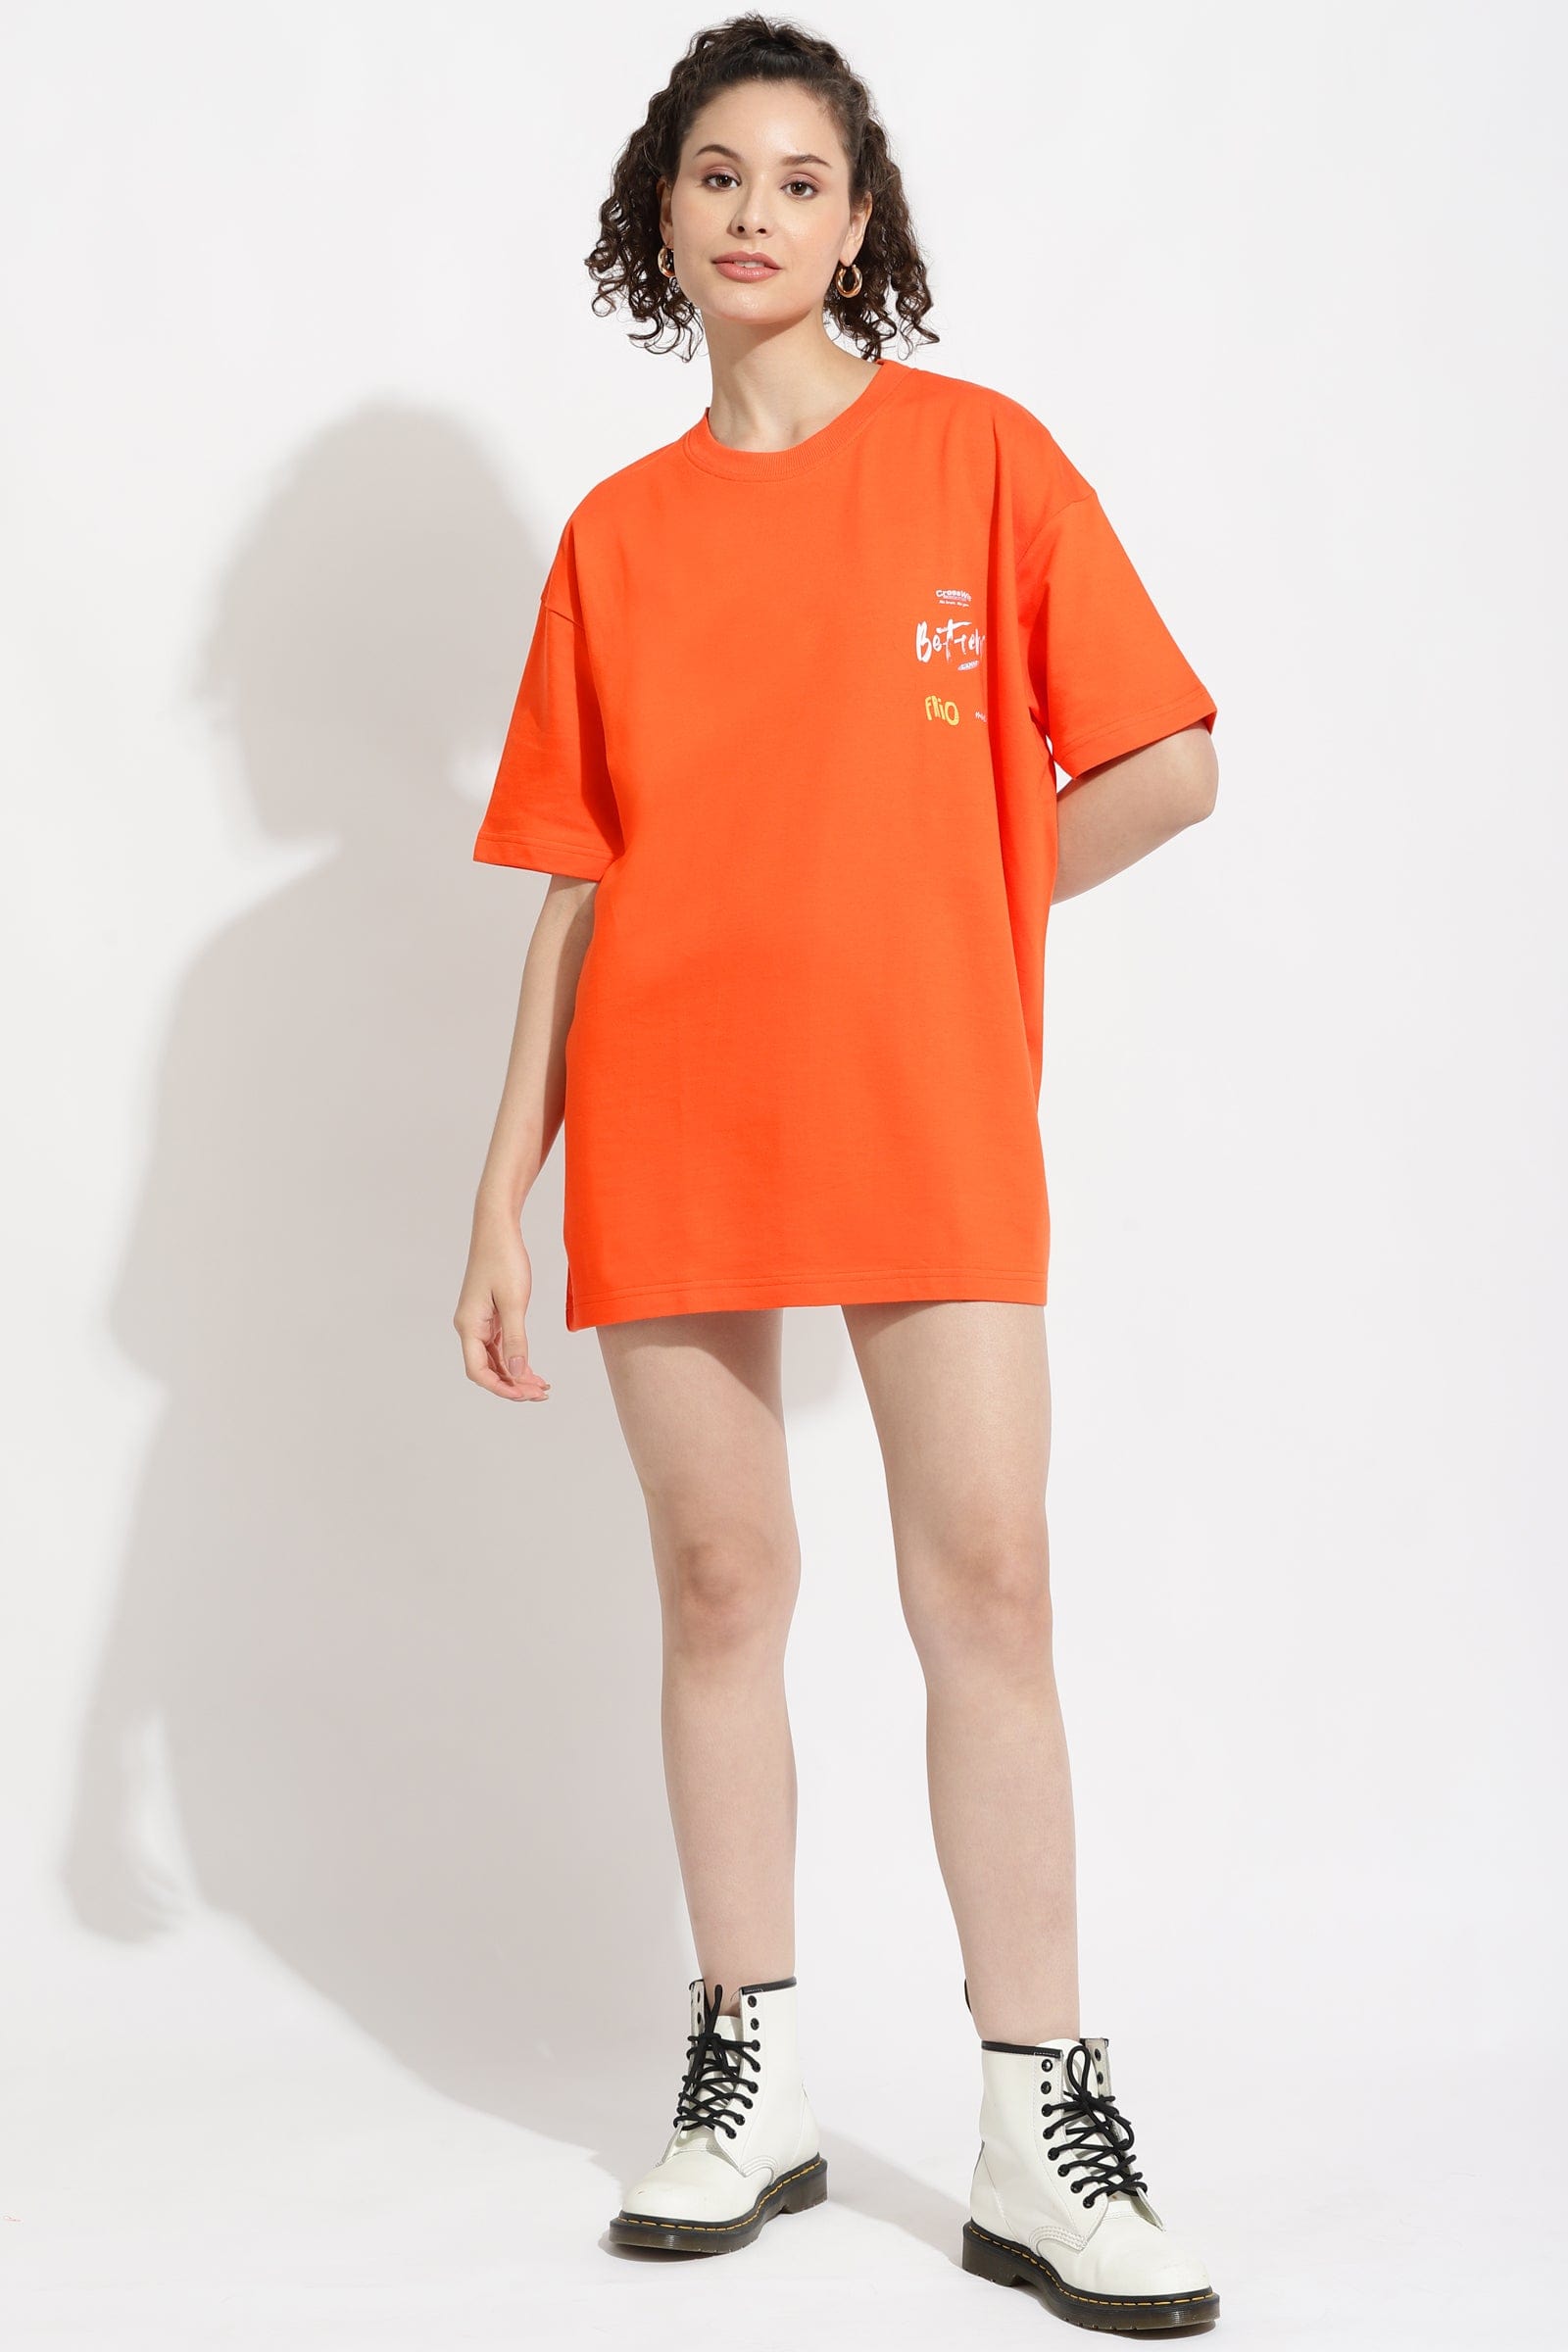 Be Firece Tangarine Orange Oversized Unisex T-Shirt By Purple Mango